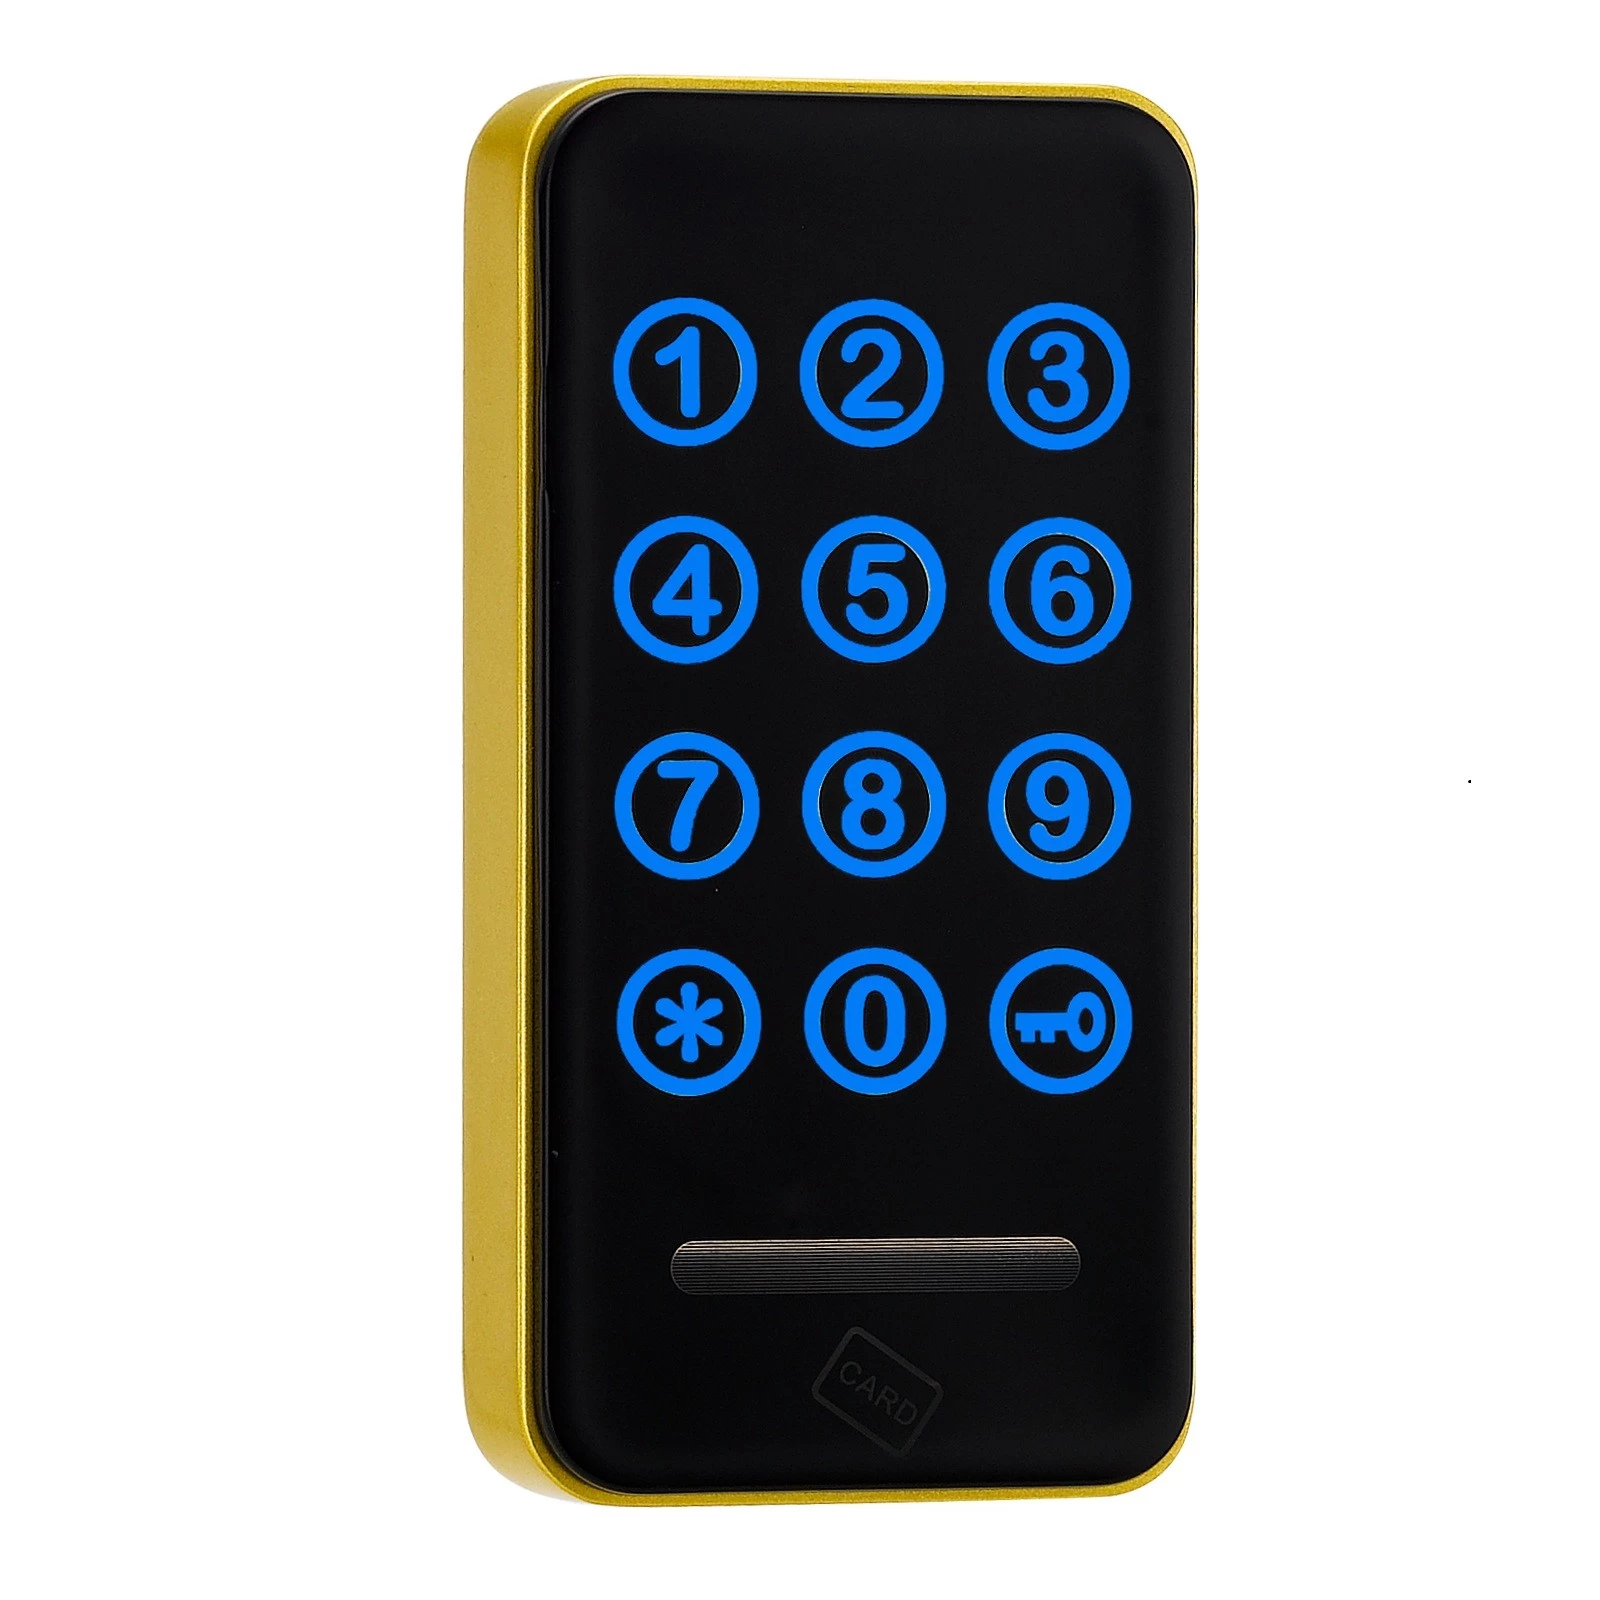 电子可触摸键盘RFID卡柜锁DH-115